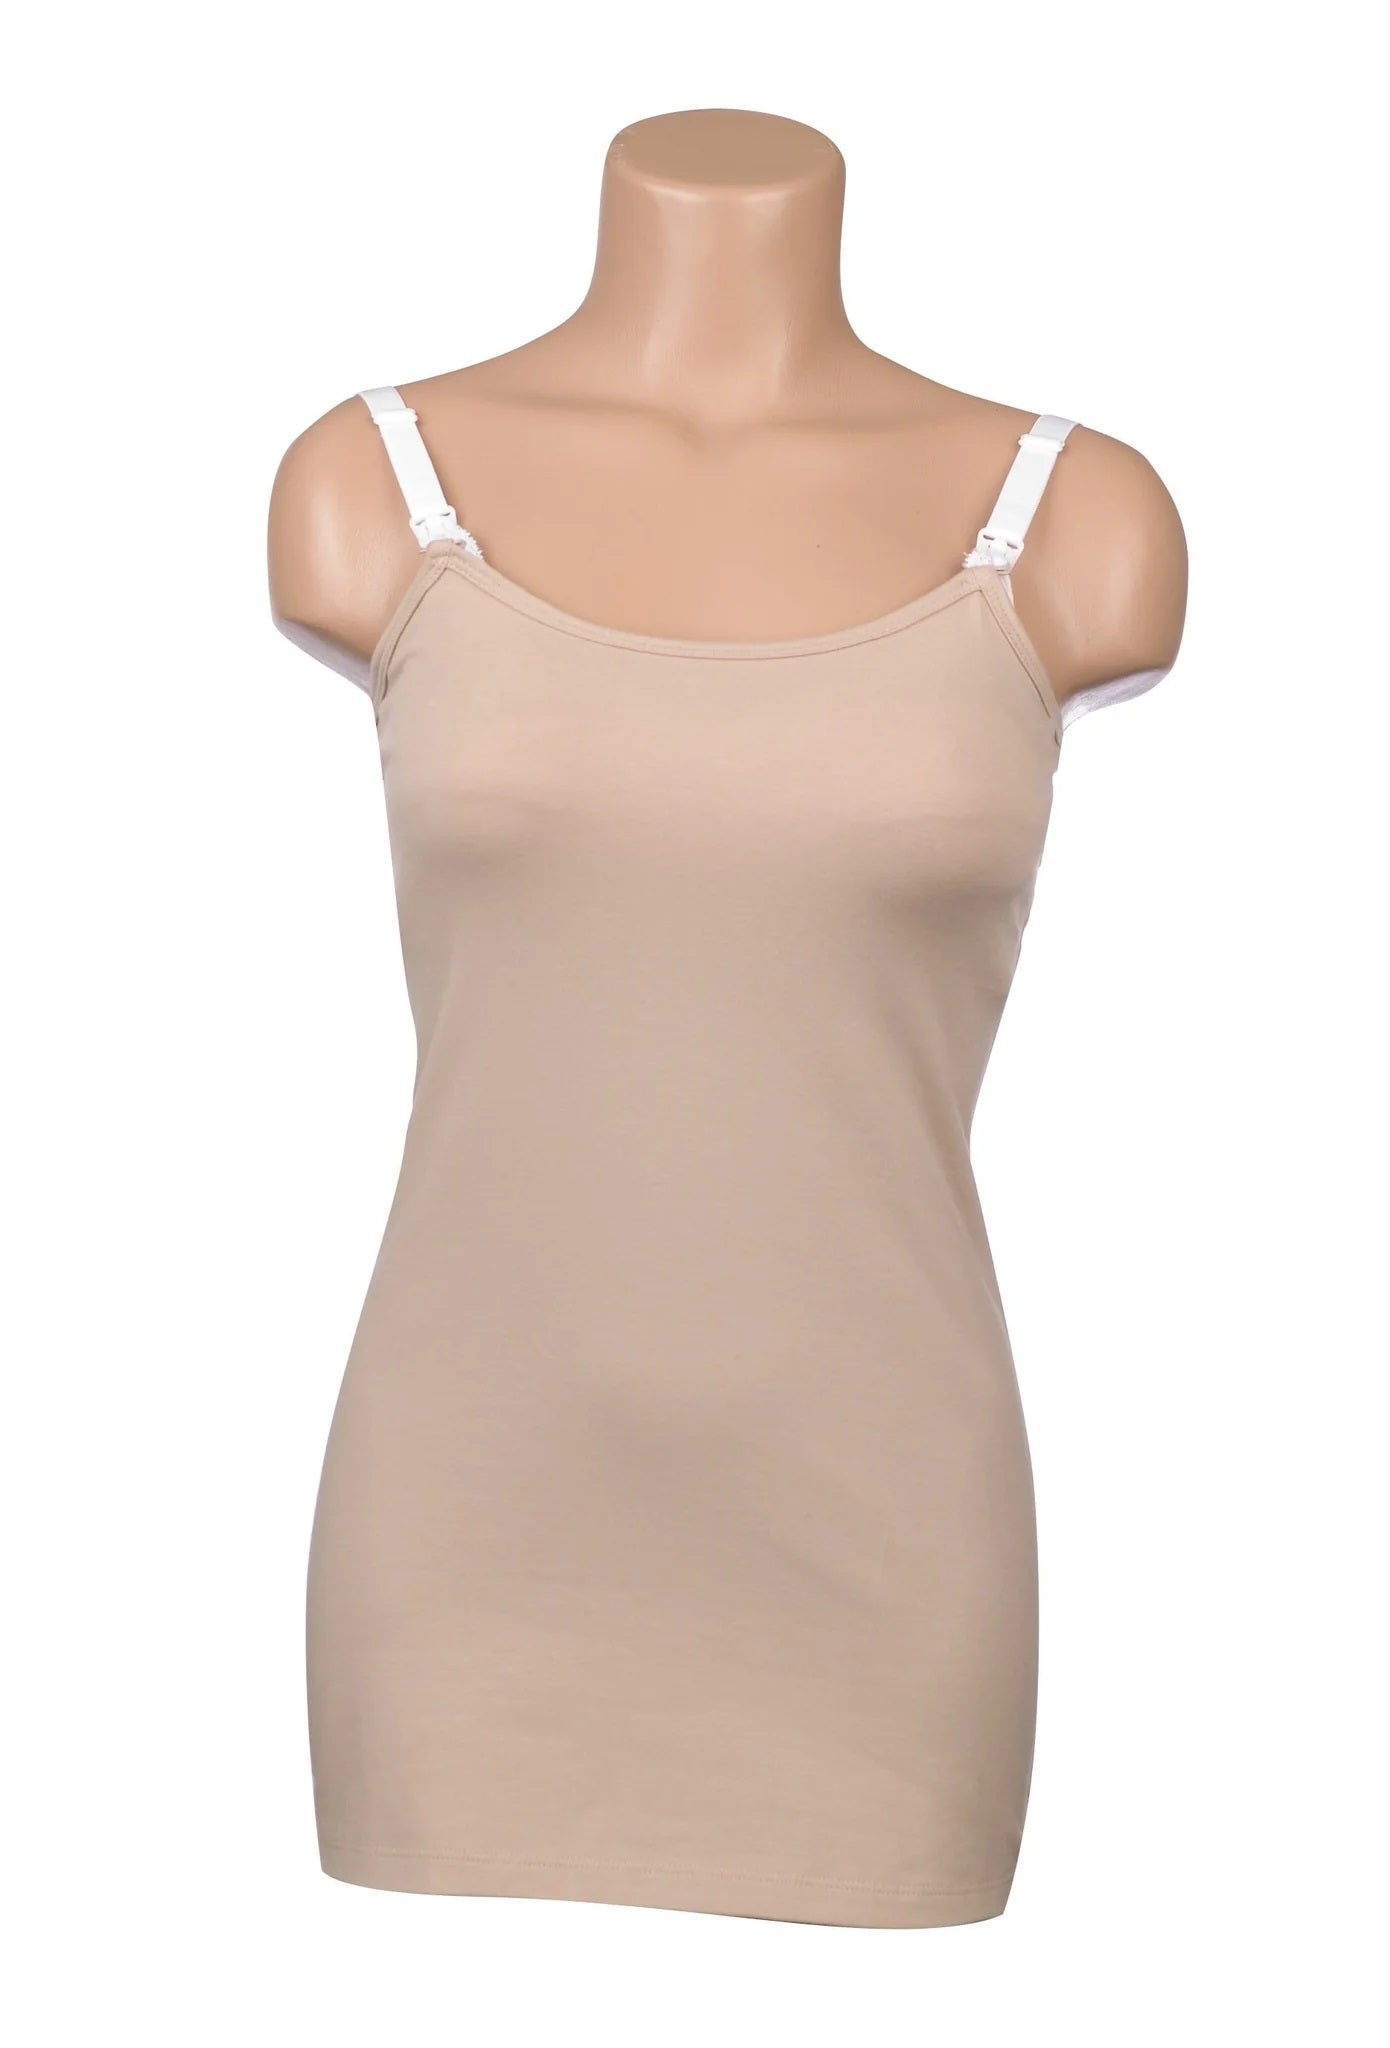 Undercover Mama Strapless Nursing Shirt in Cream, size XS